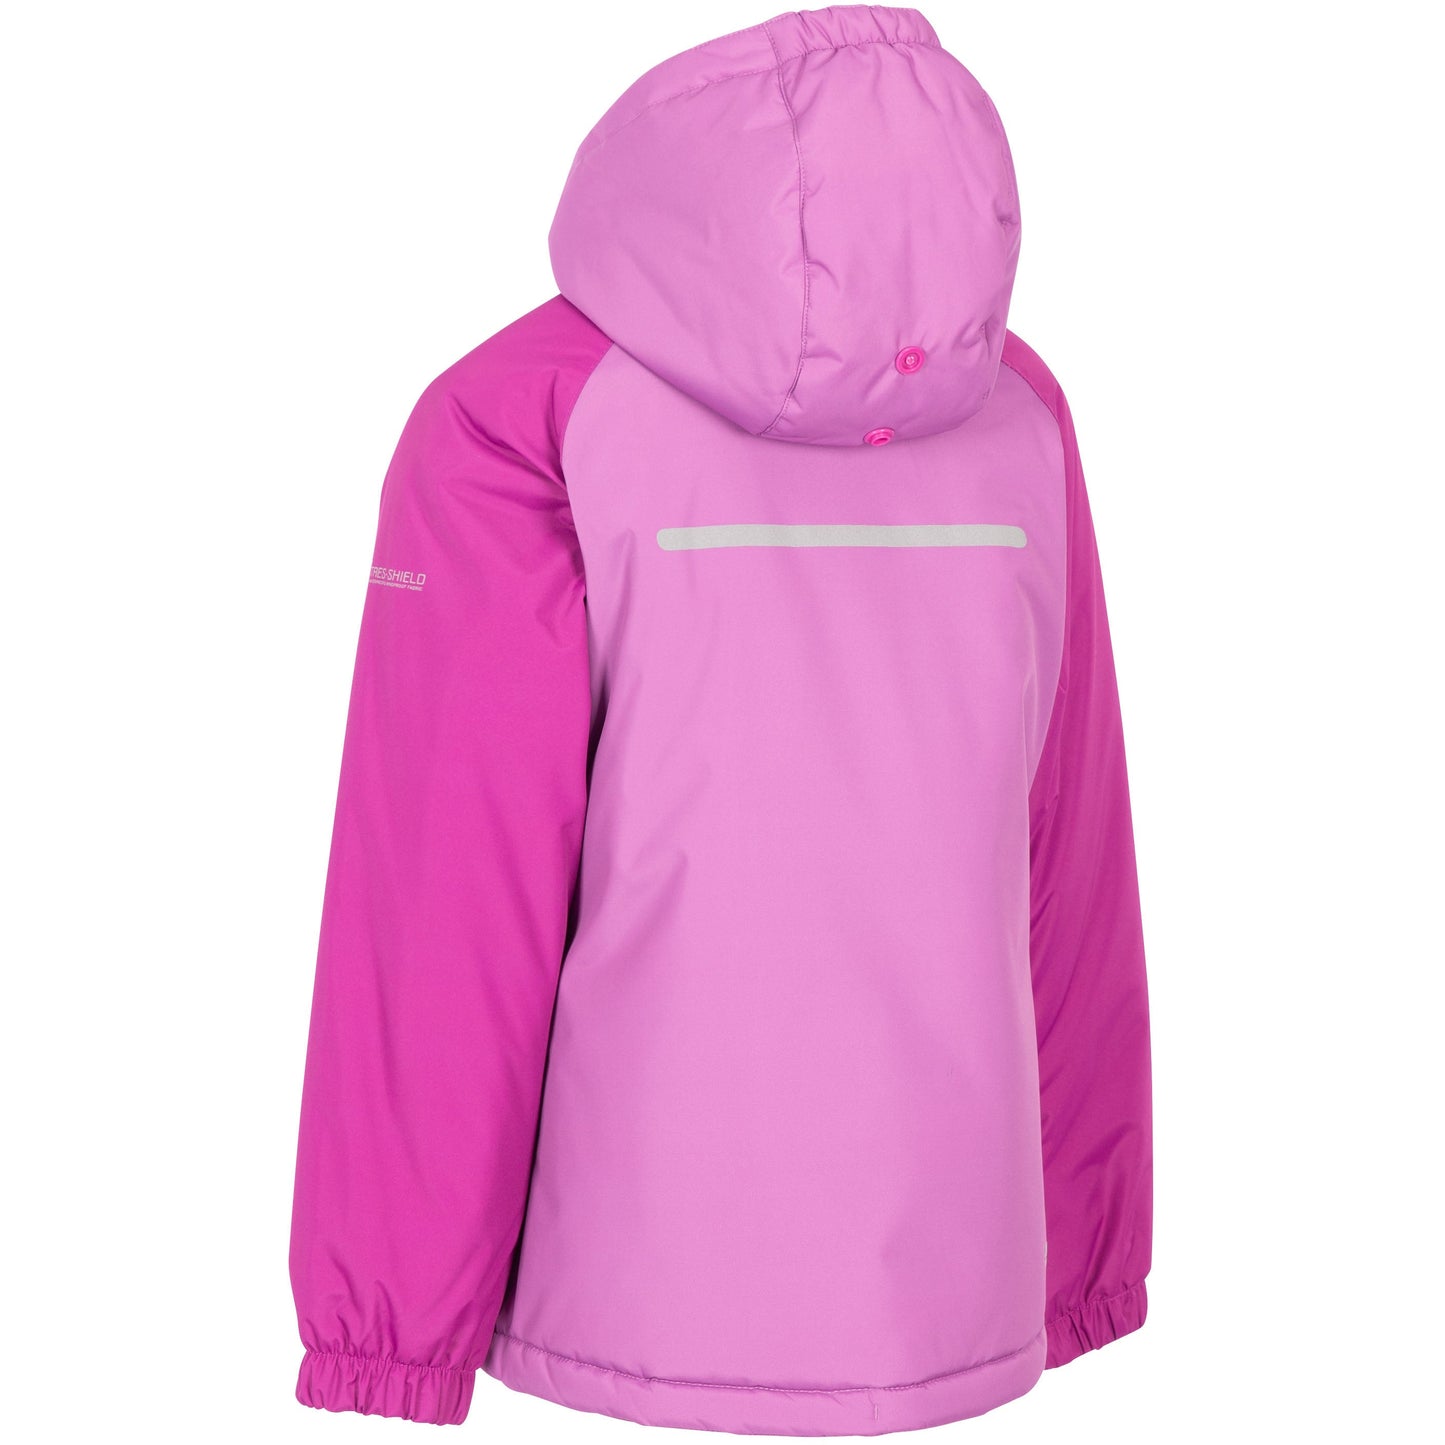 Tuneful Girls' Padded Waterproof Rain Jacket in Deep Pink